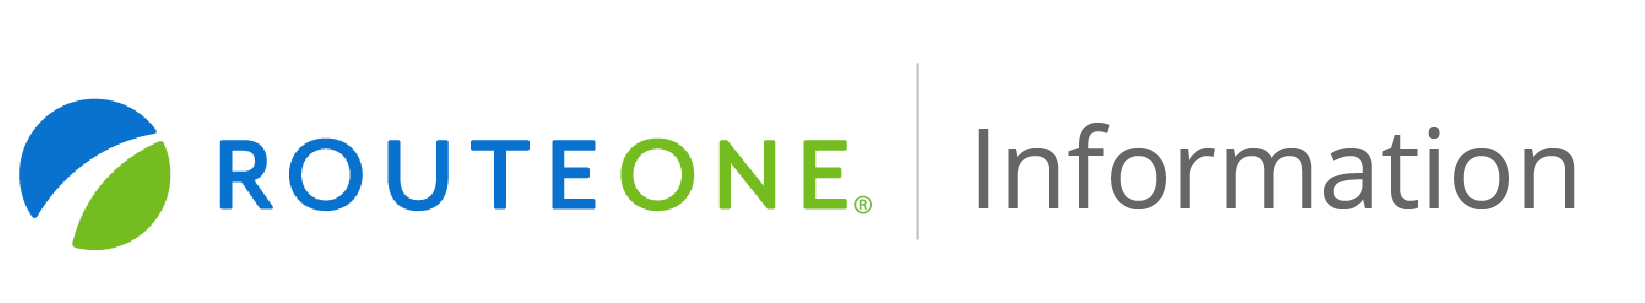 RouteOne News/Info logo